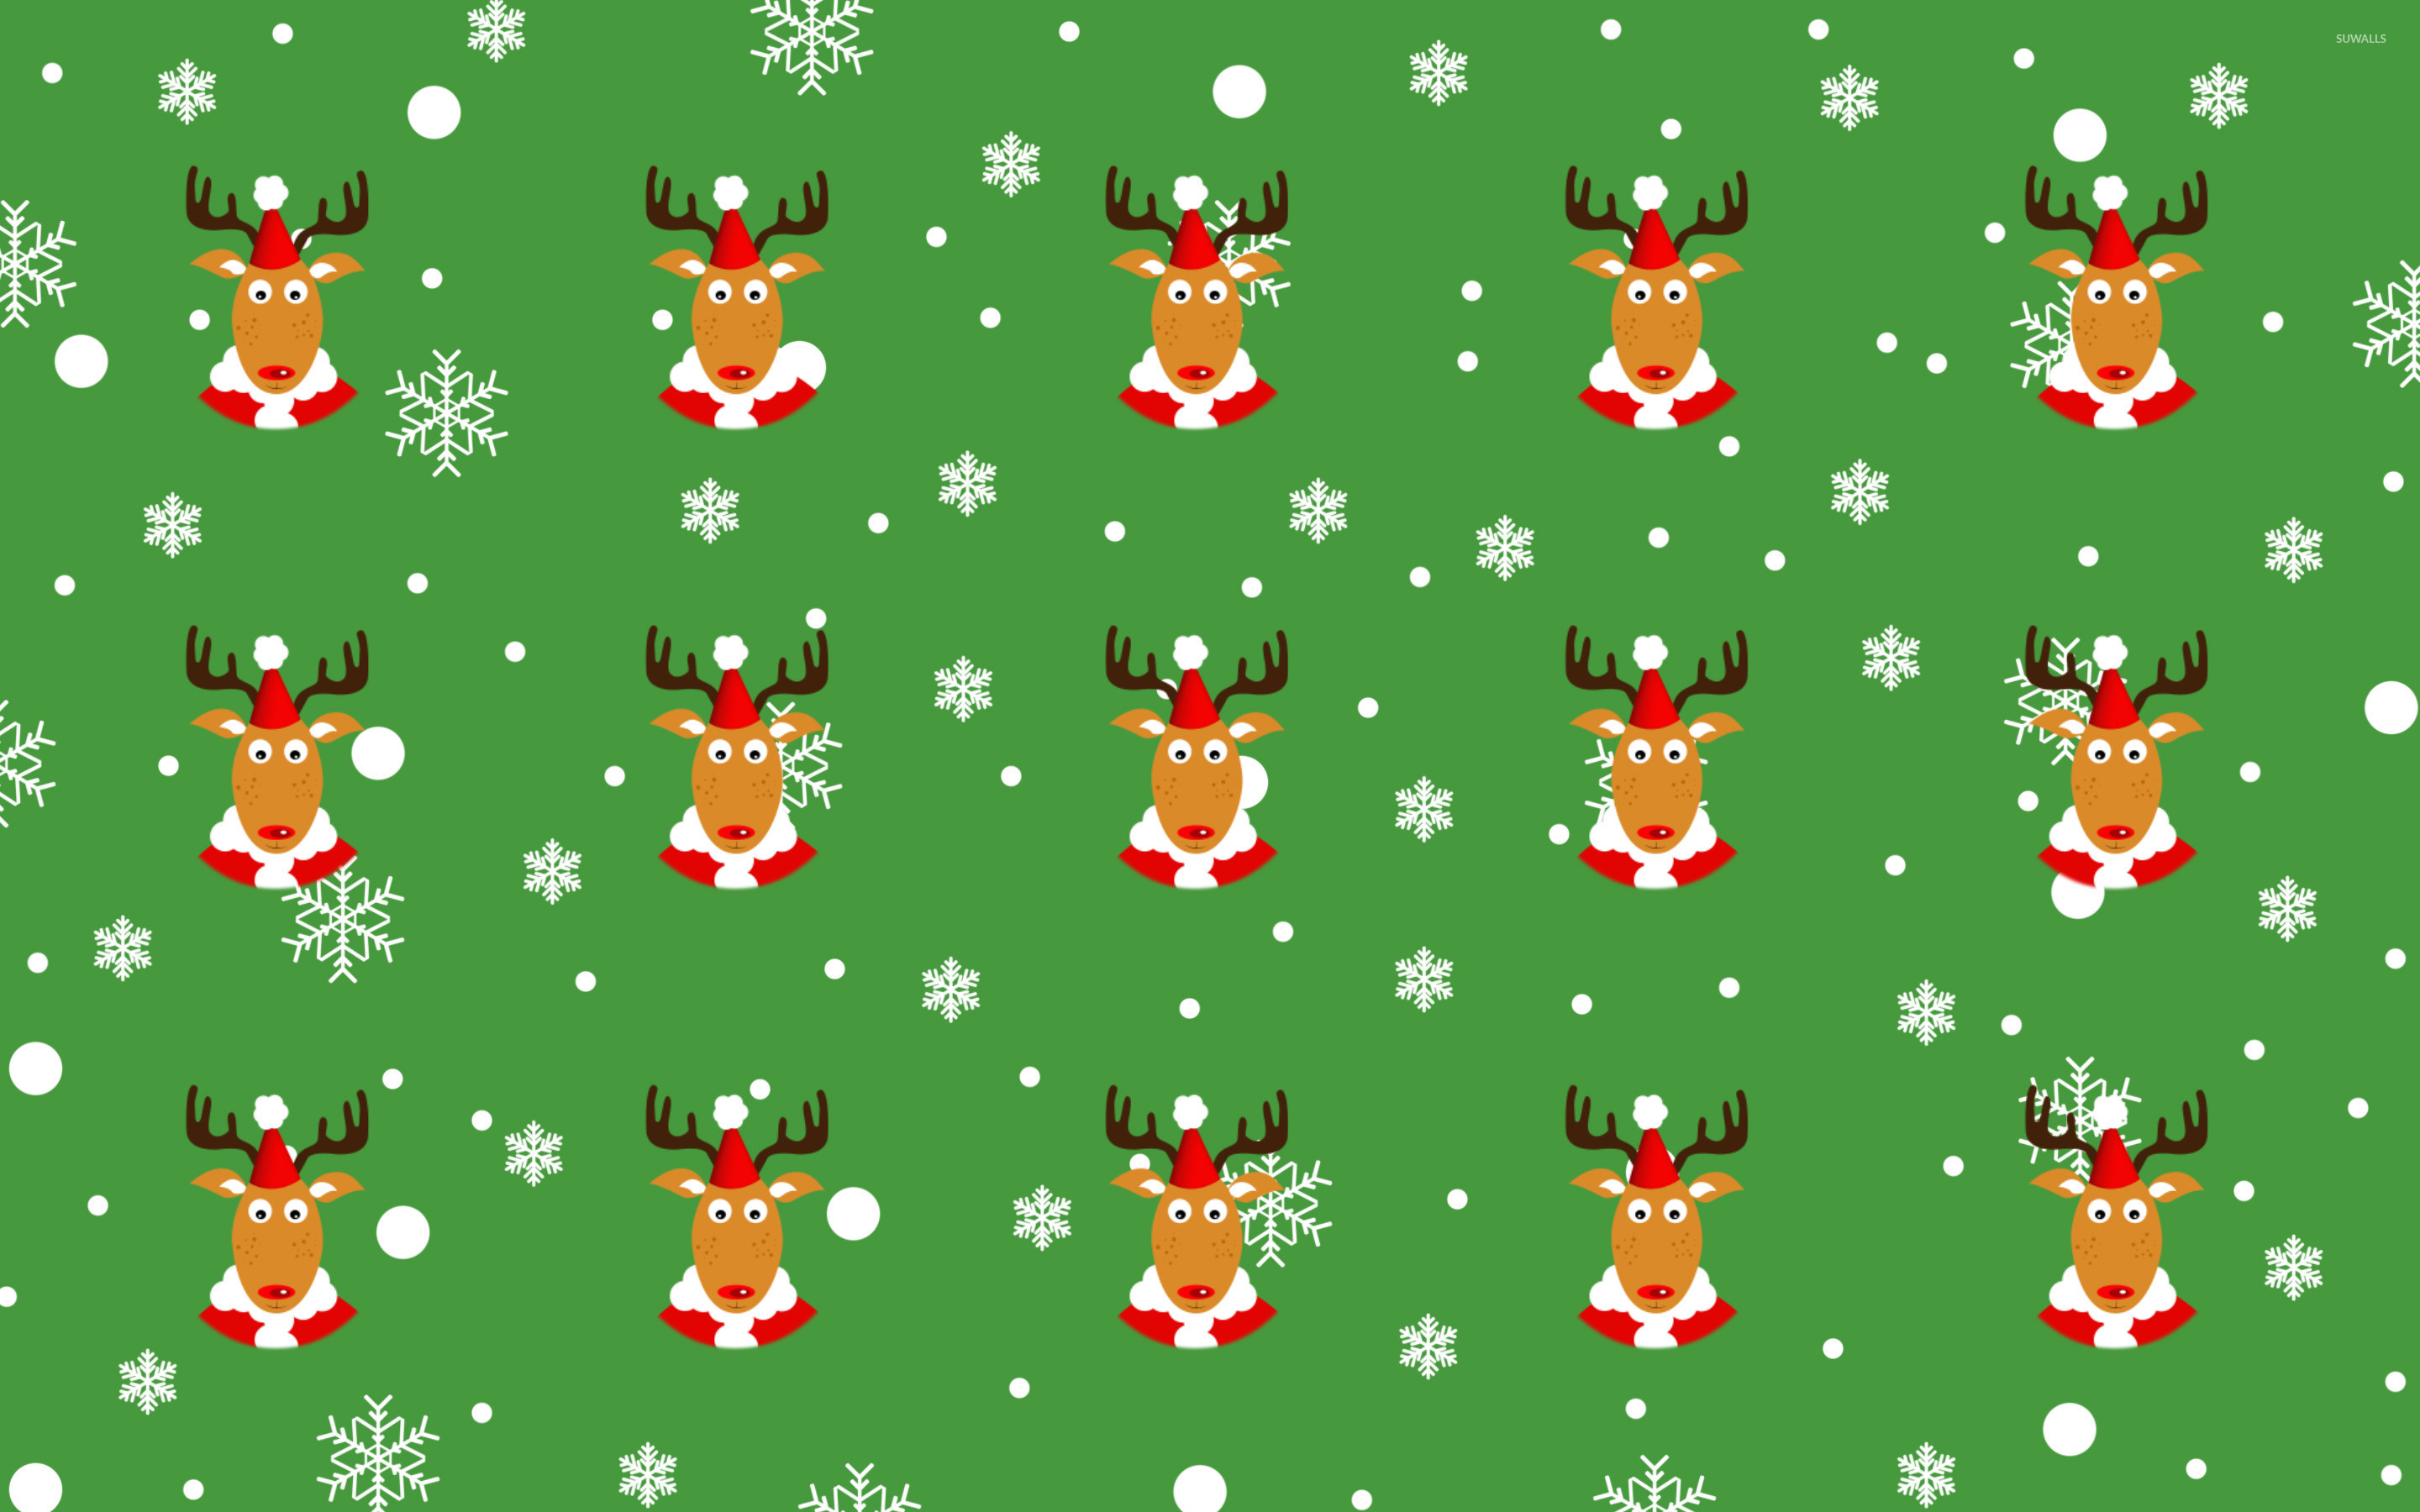 Reindeer pattern wallpaper - Holiday wallpapers - #25547